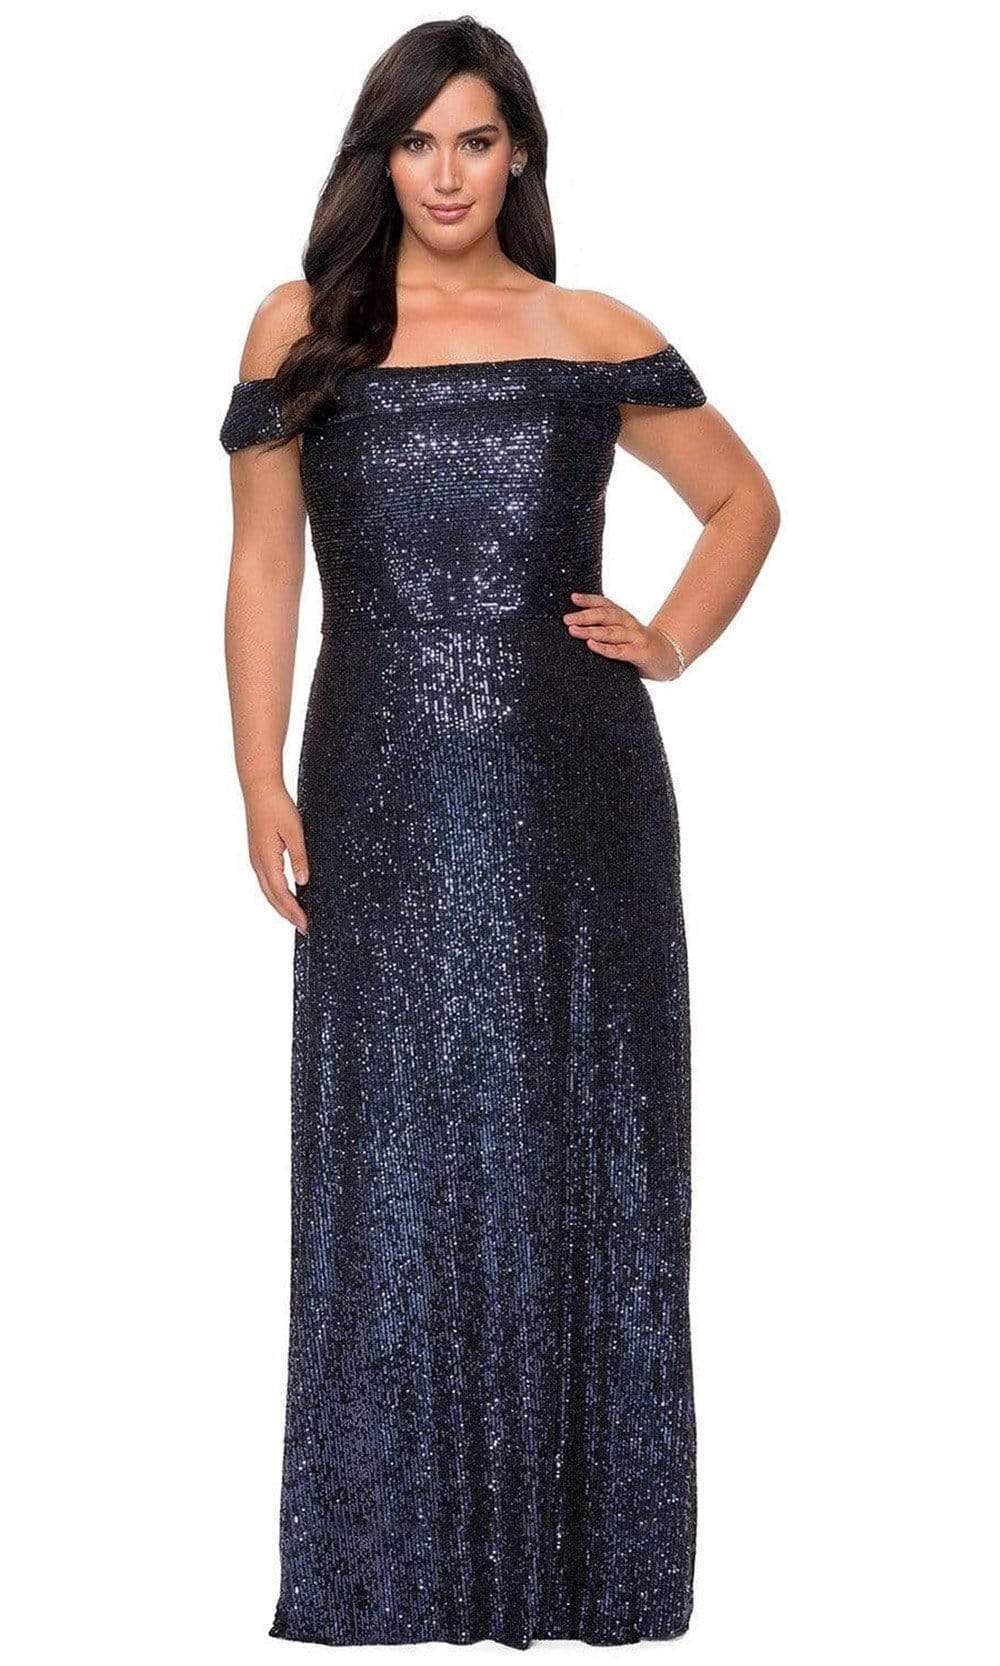 Image of La Femme - 28988 Sequined Off-Shoulder A-Line Plus Size Prom Dress